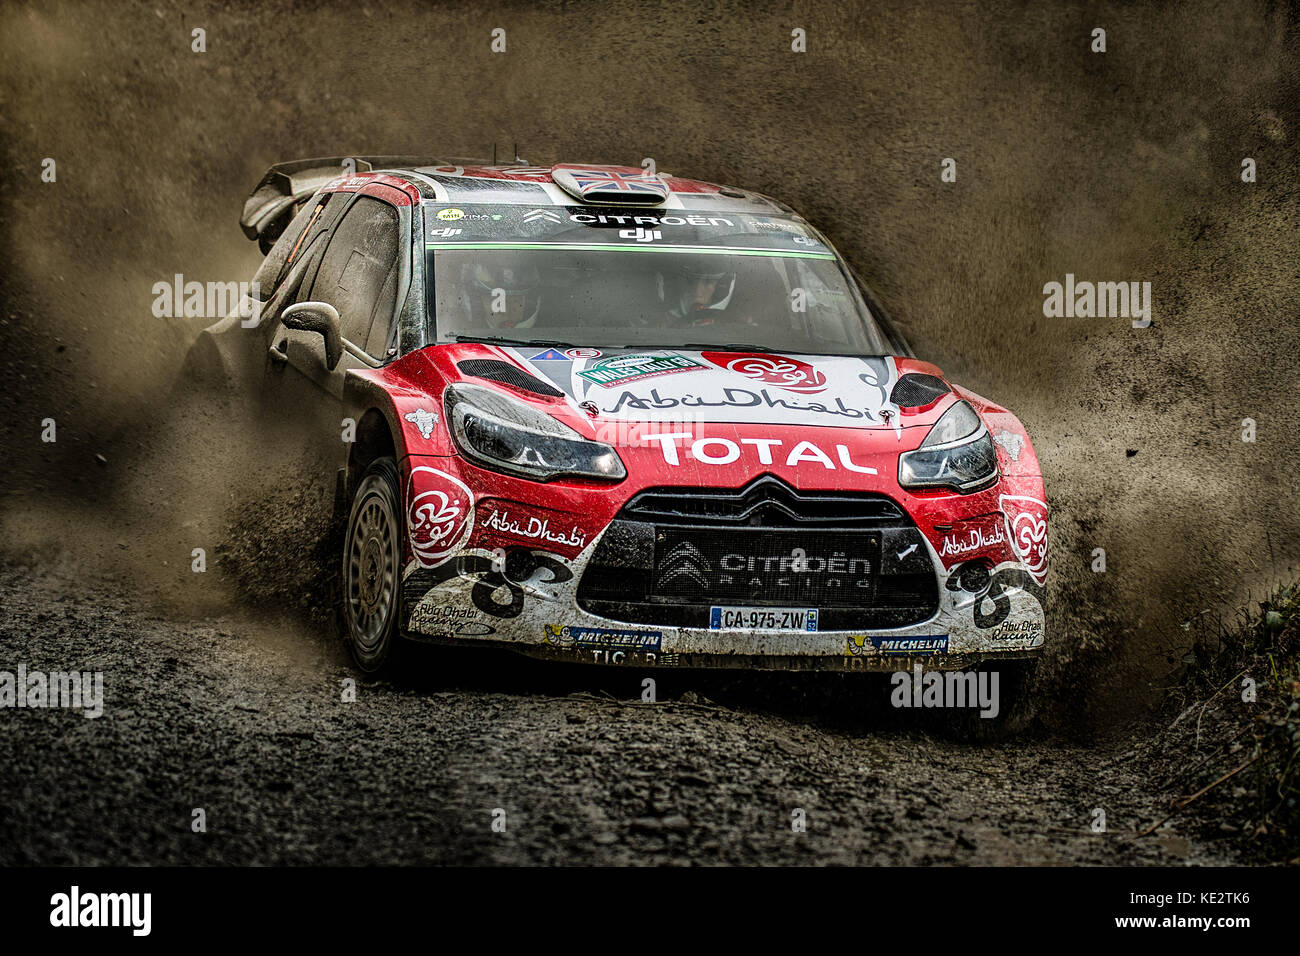 Kris Meeke at the WRC World Rally Championship, Wales Rally GB, Wales, UK  Stock Photo - Alamy